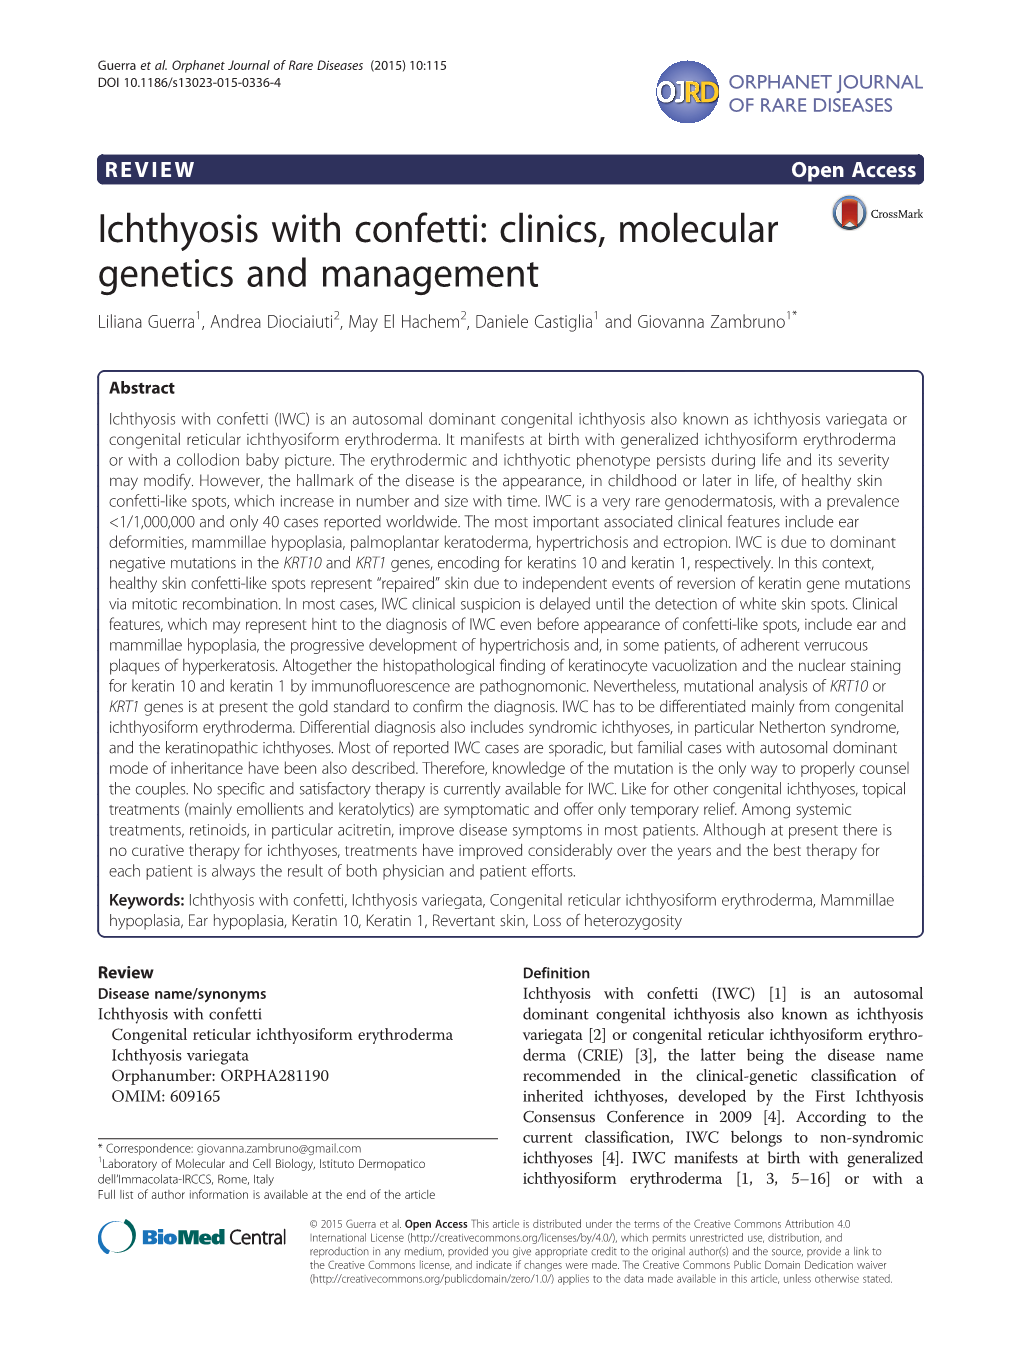 Ichthyosis with Confetti: Clinics, Molecular Genetics and Management Liliana Guerra1, Andrea Diociaiuti2, May El Hachem2, Daniele Castiglia1 and Giovanna Zambruno1*